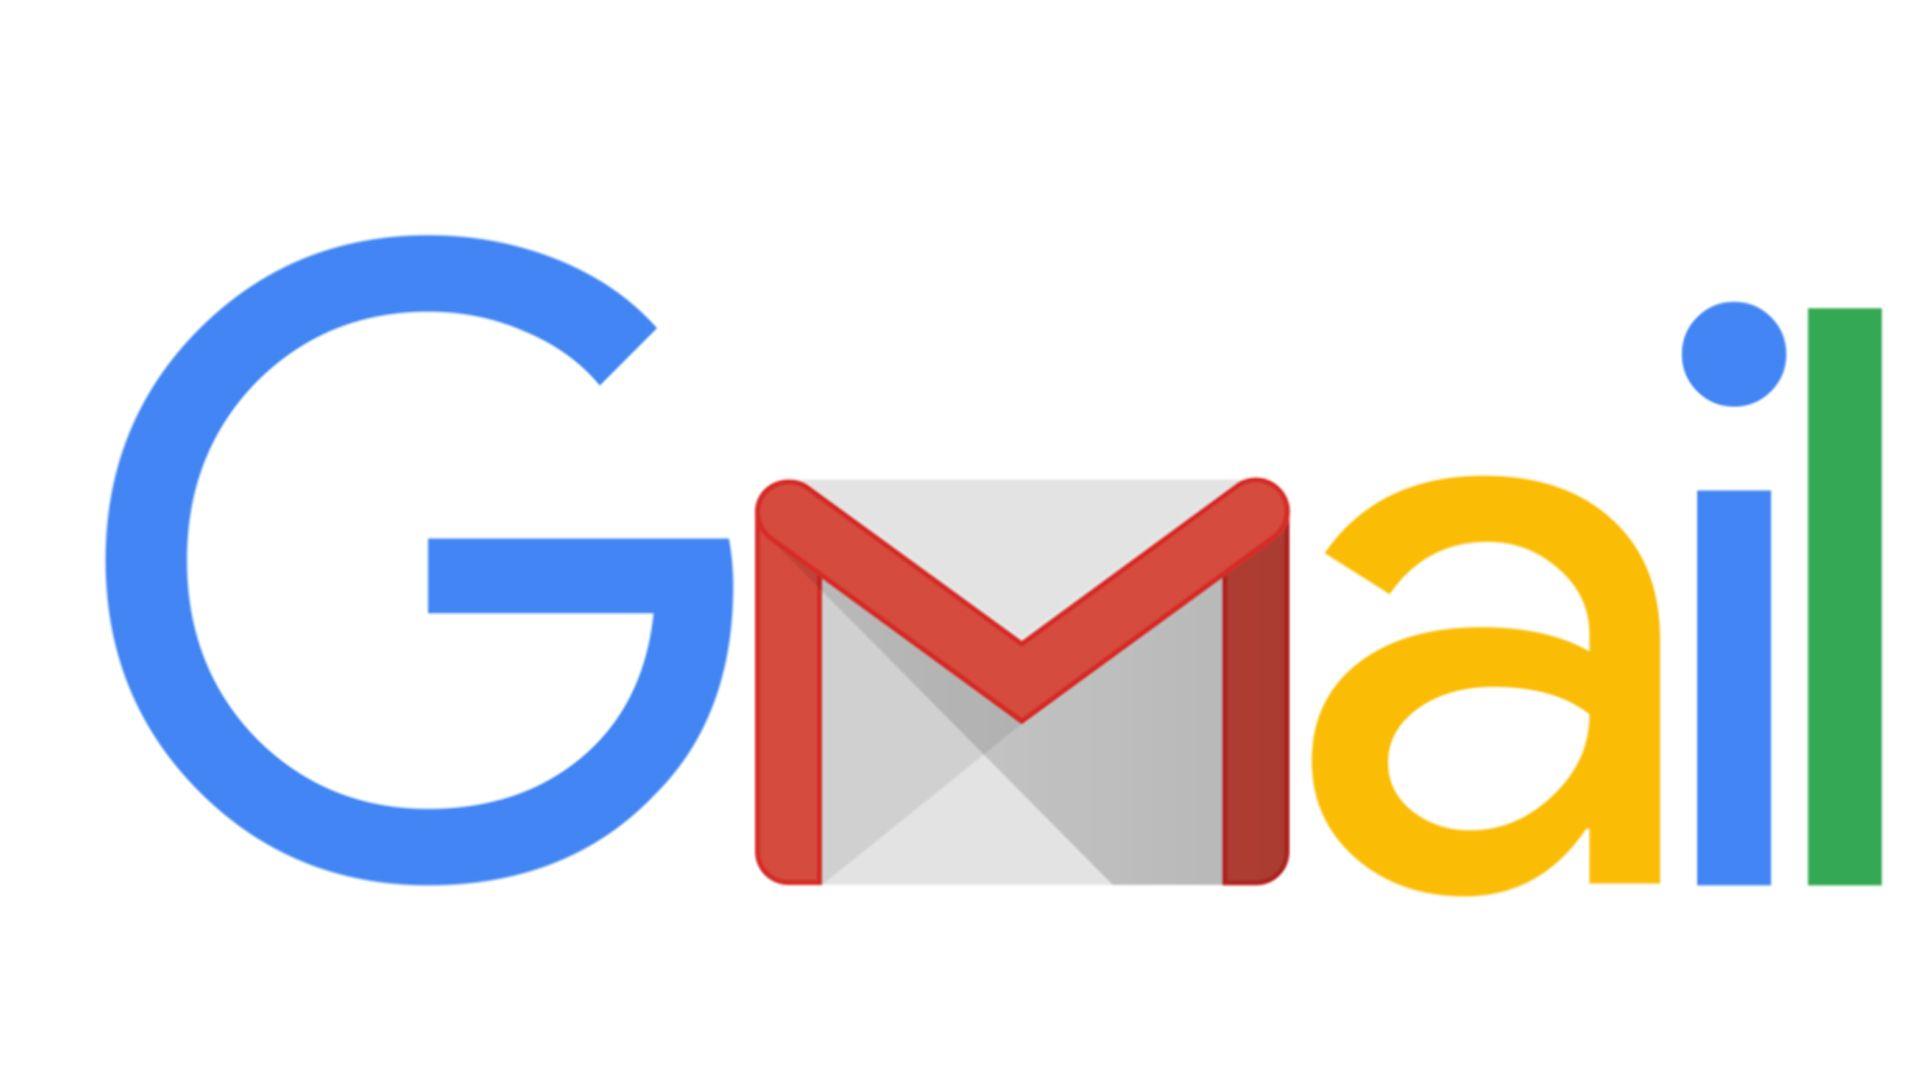 New Maytag Logo - Gmail Logo, Gmail Symbol, History and Evolution